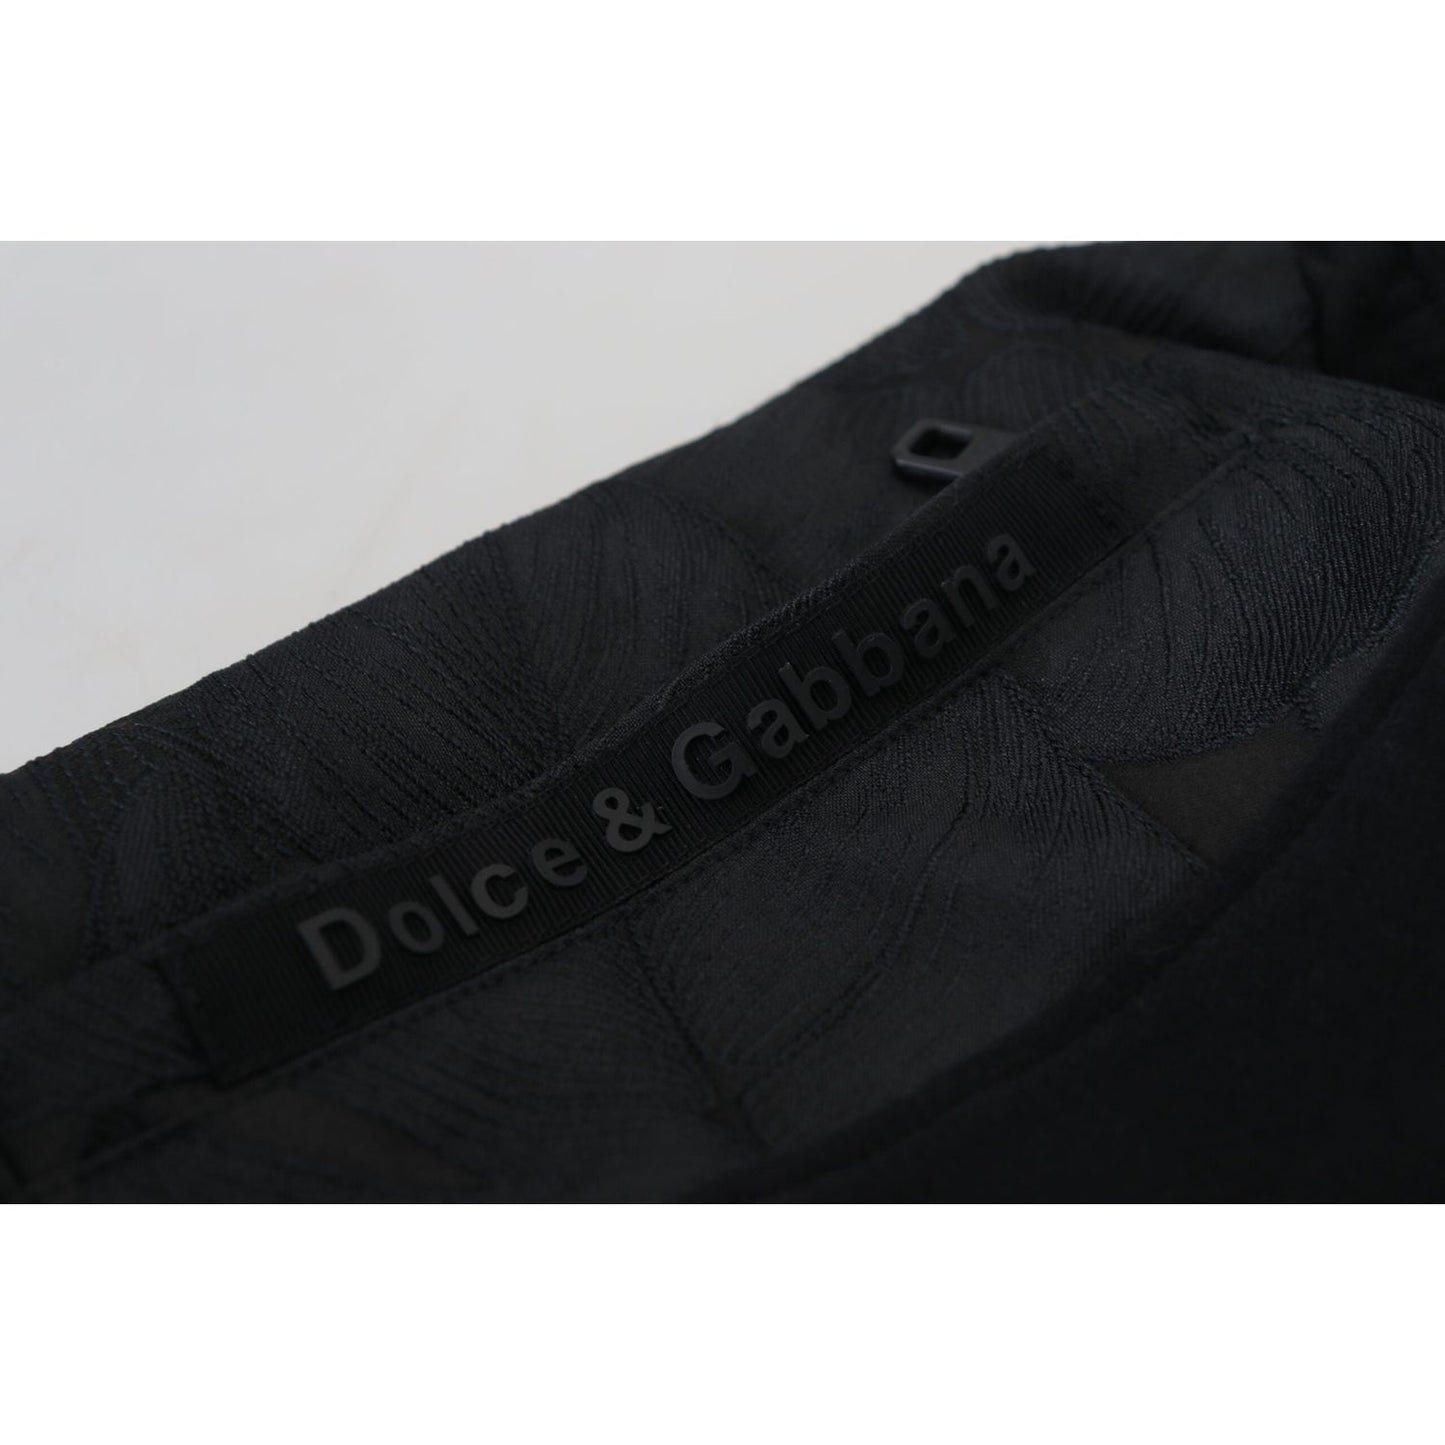 Dolce & Gabbana Elegant Black Jogger Pants for the Modern Man black-polyester-skinny-jogger-men-pants